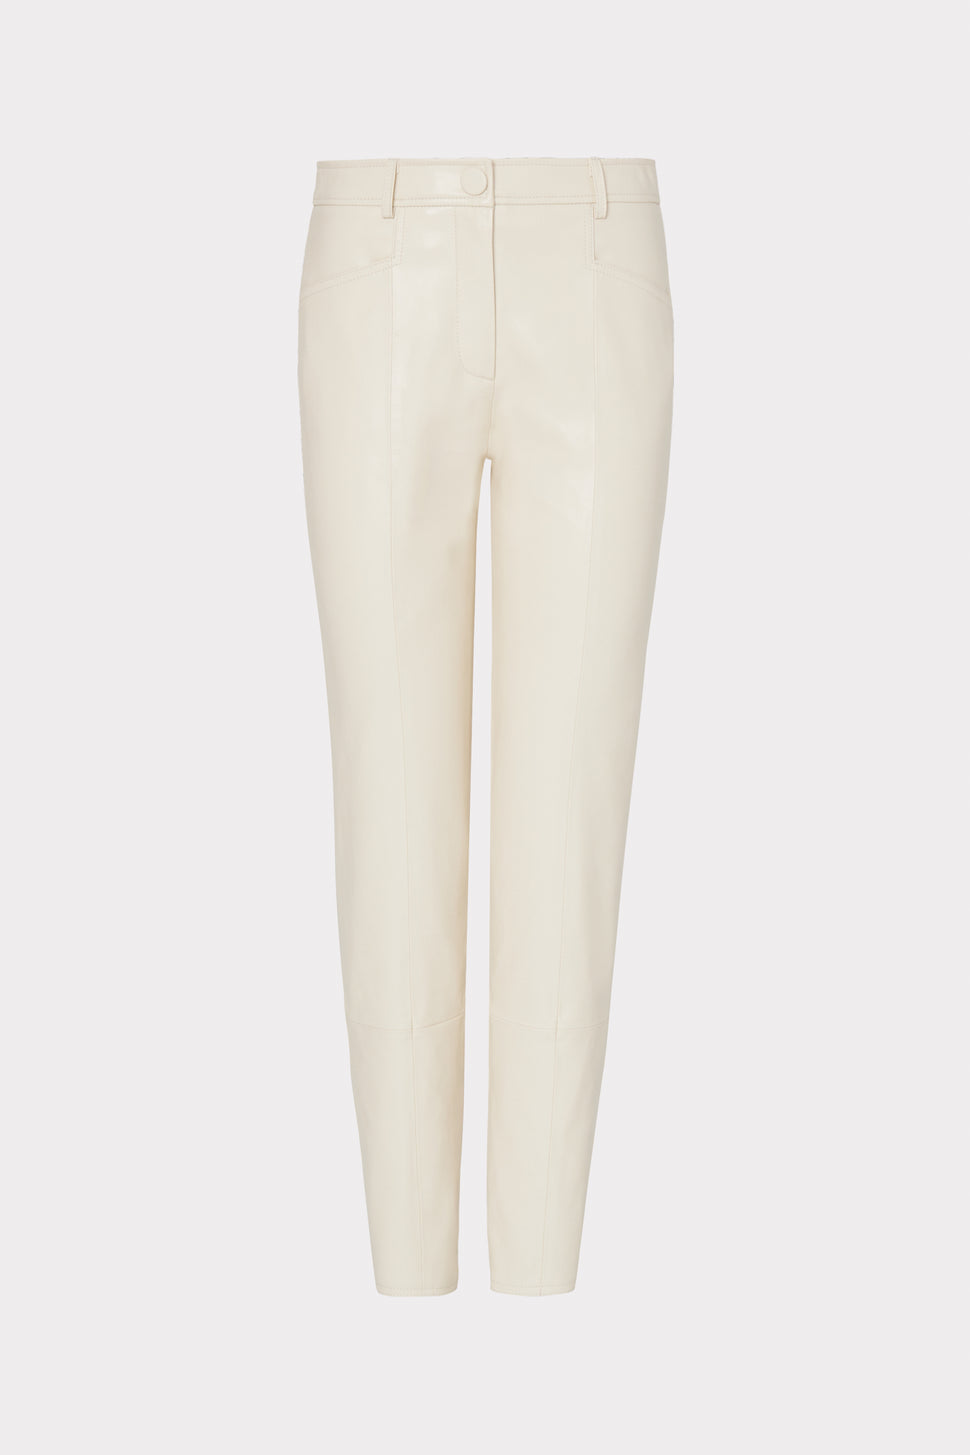 Maximum Style Off White Vegan Leather Trouser Pants